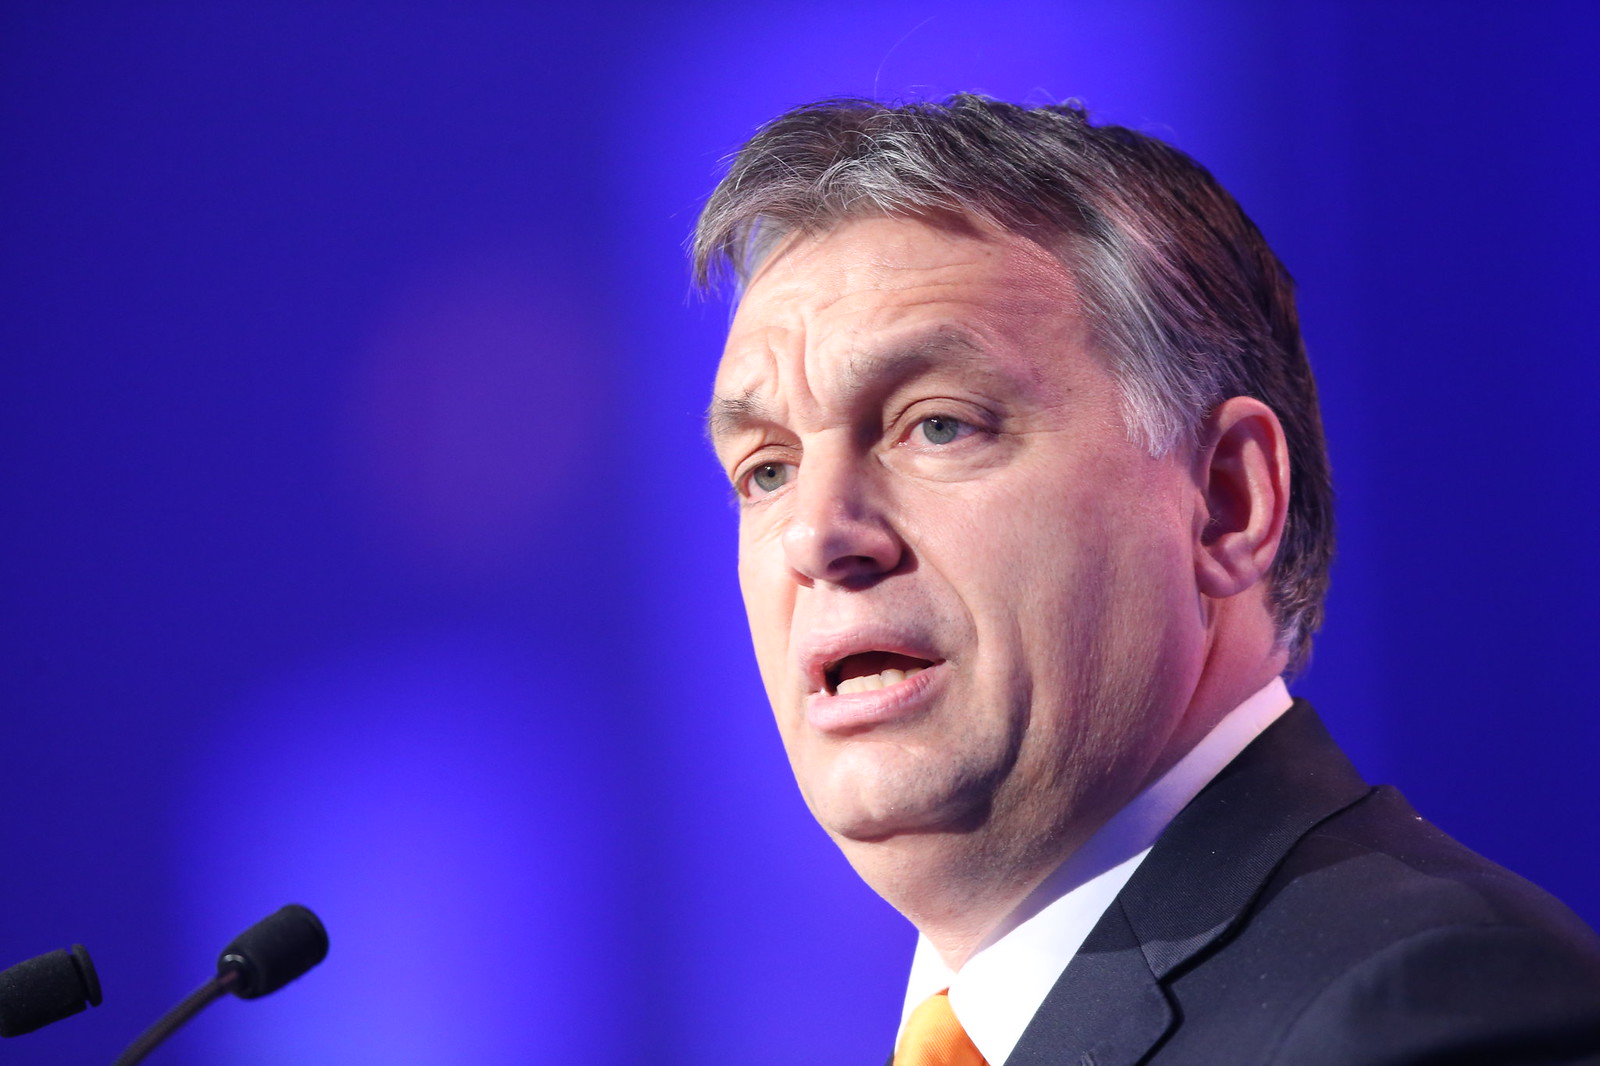 Viktor Orbán, Image by European People’s Party, <a href="https://flic.kr/p/mGbBW2">https://flic.kr/p/mGbBW2</a>